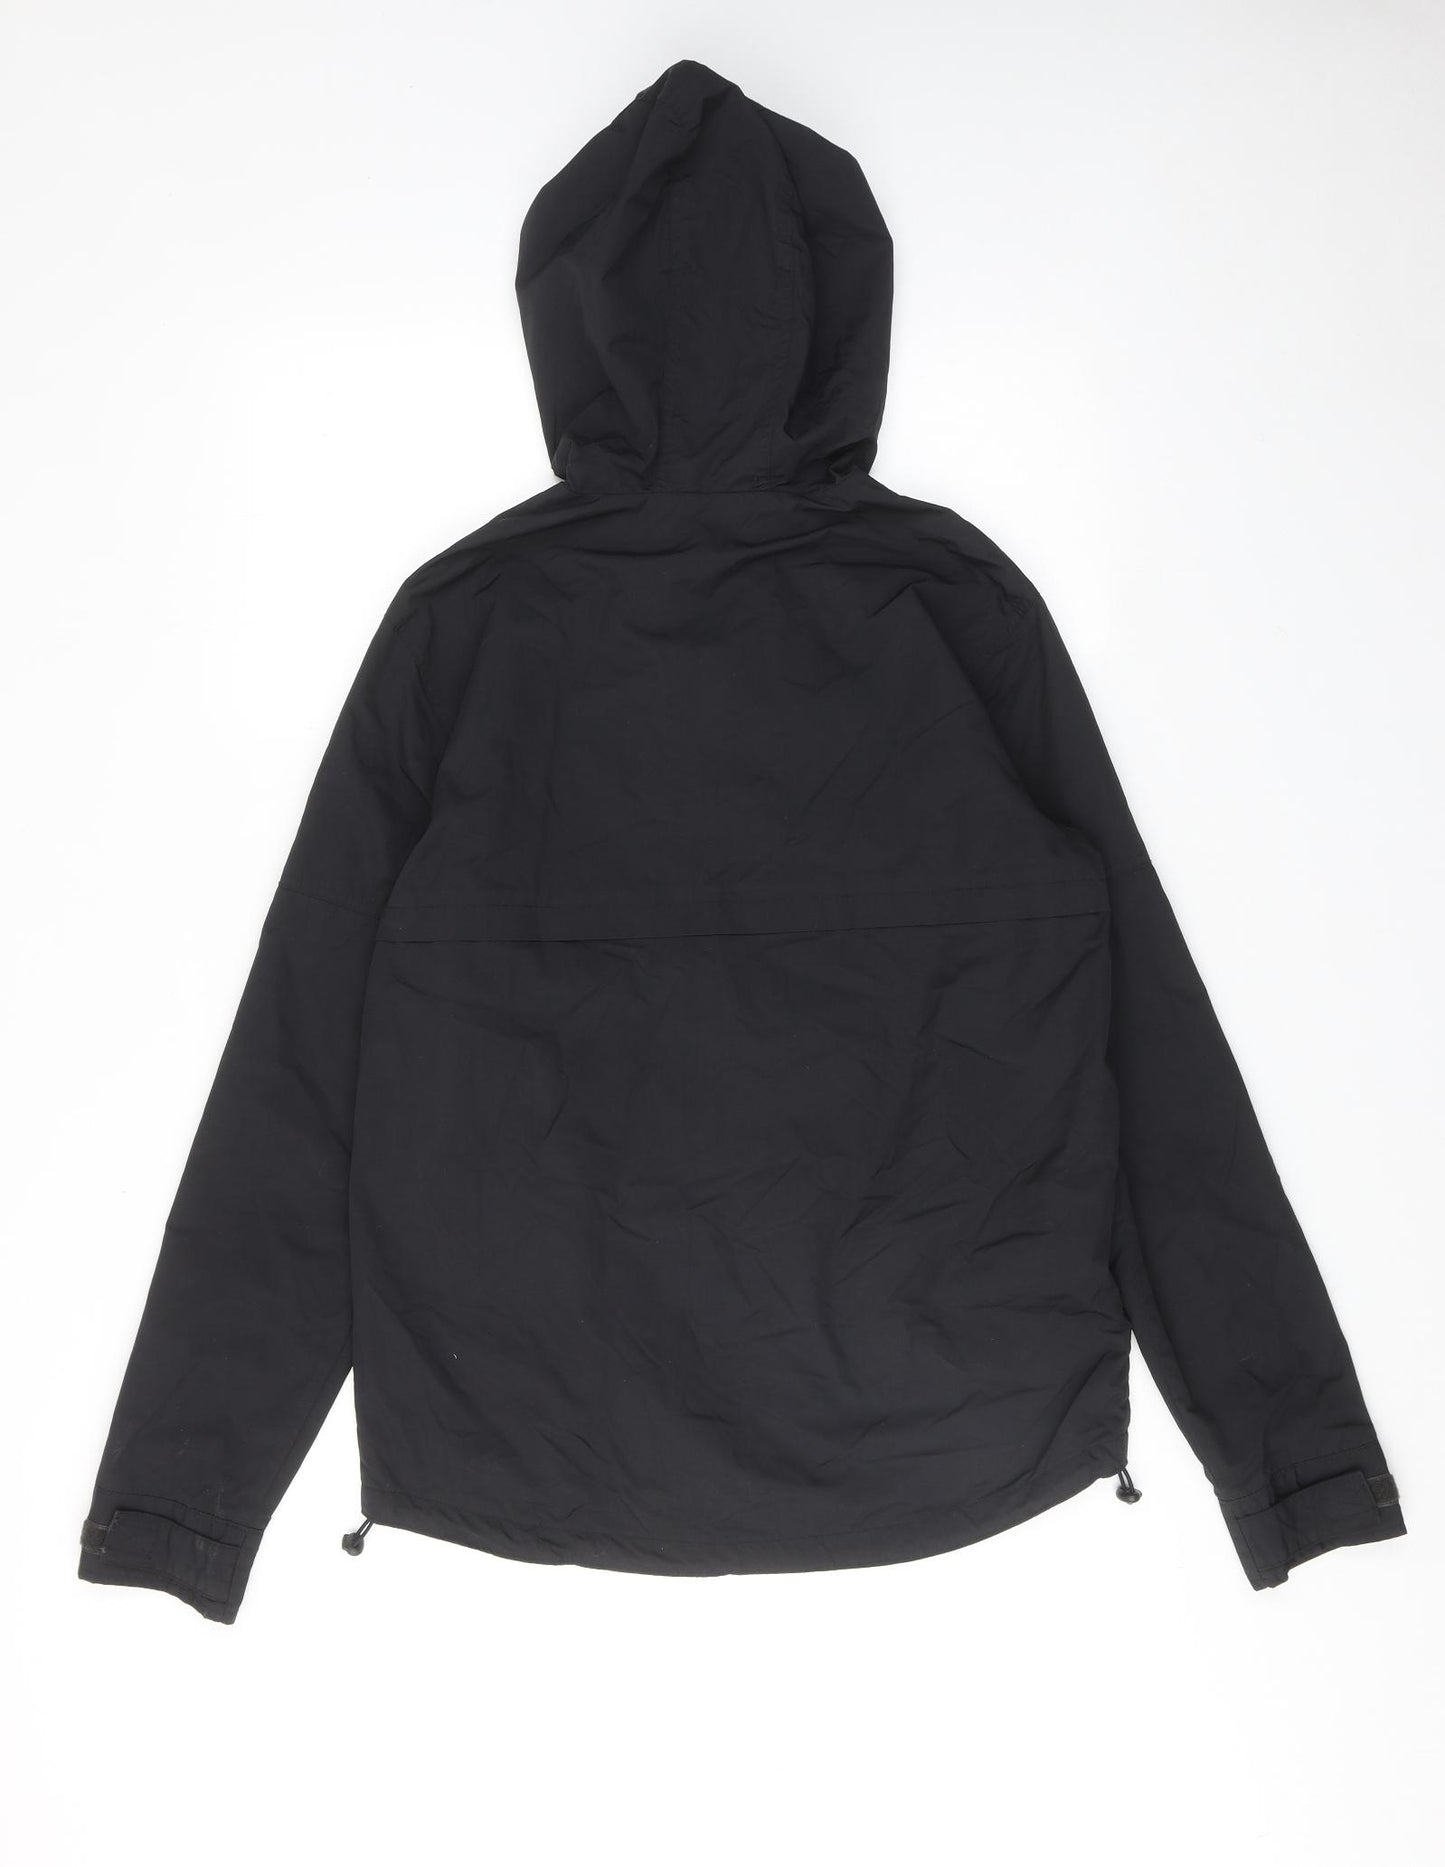 //Produkt Mens Black Windbreaker Jacket Size S Zip